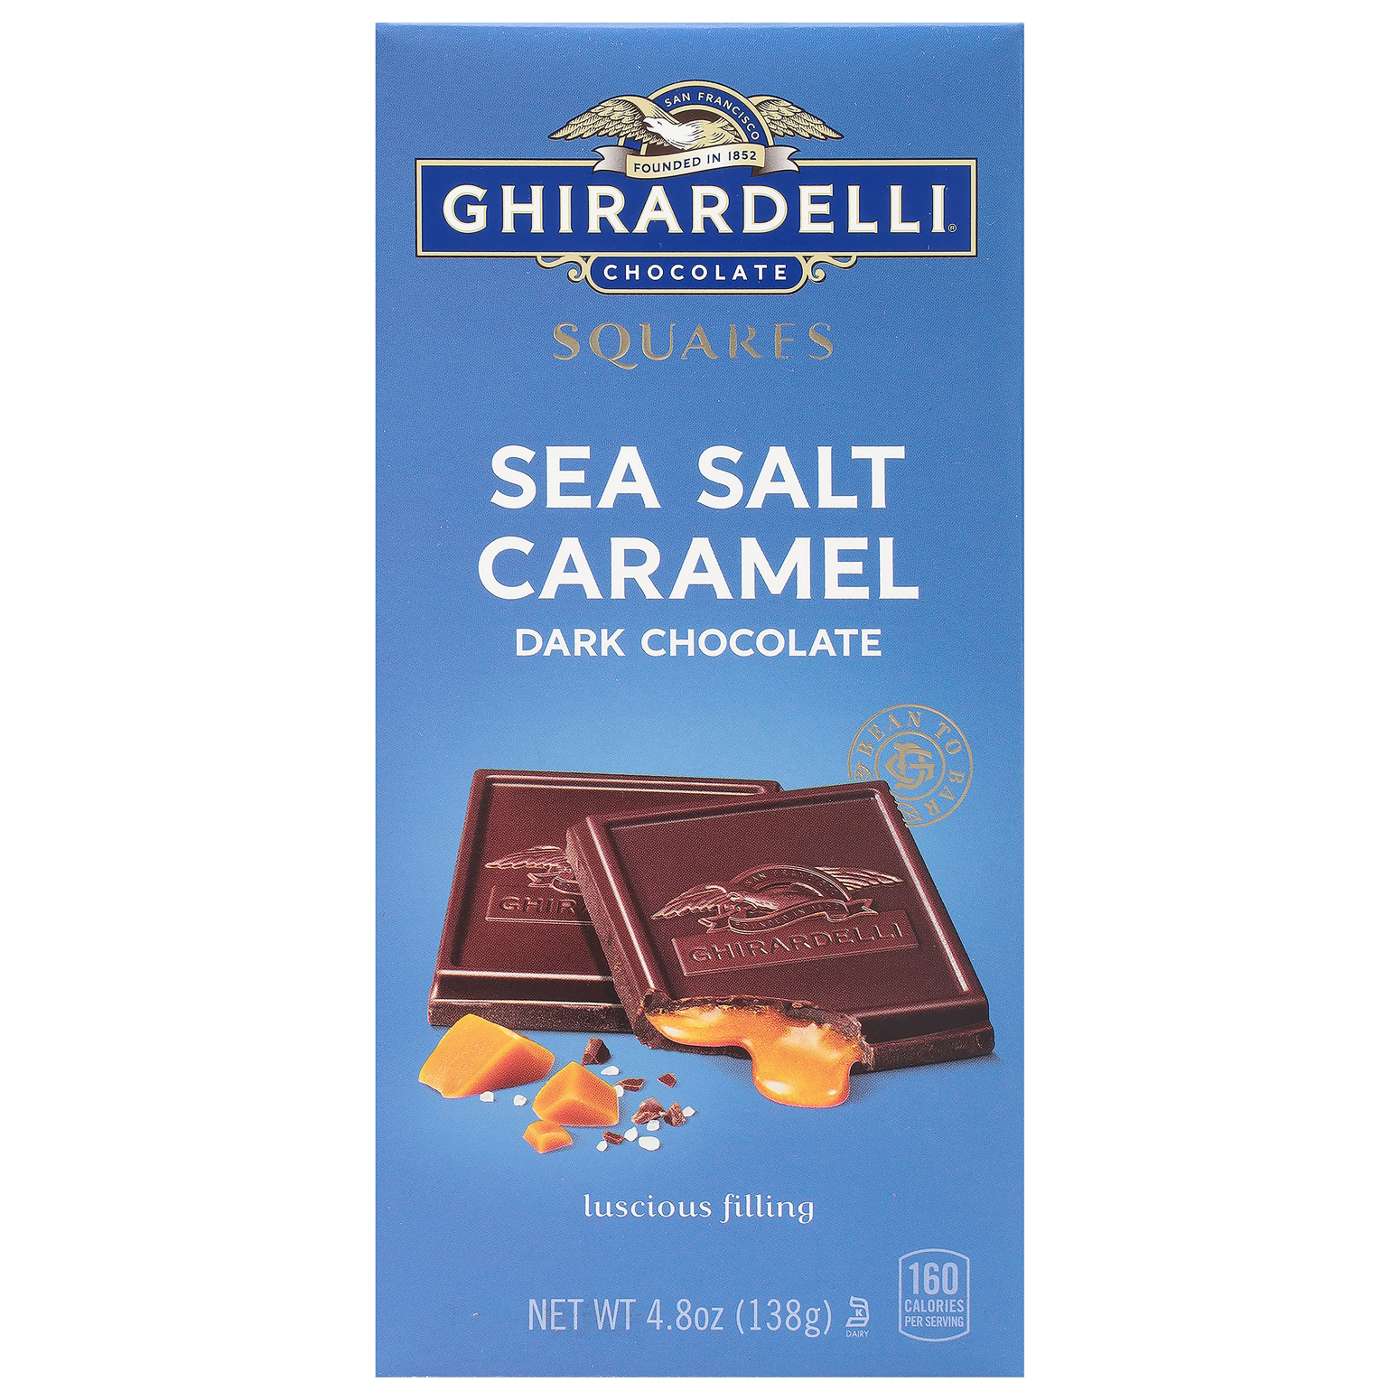 Ghirardelli Squares Sea Salt Caramel Dark Chocolate Bar; image 1 of 3